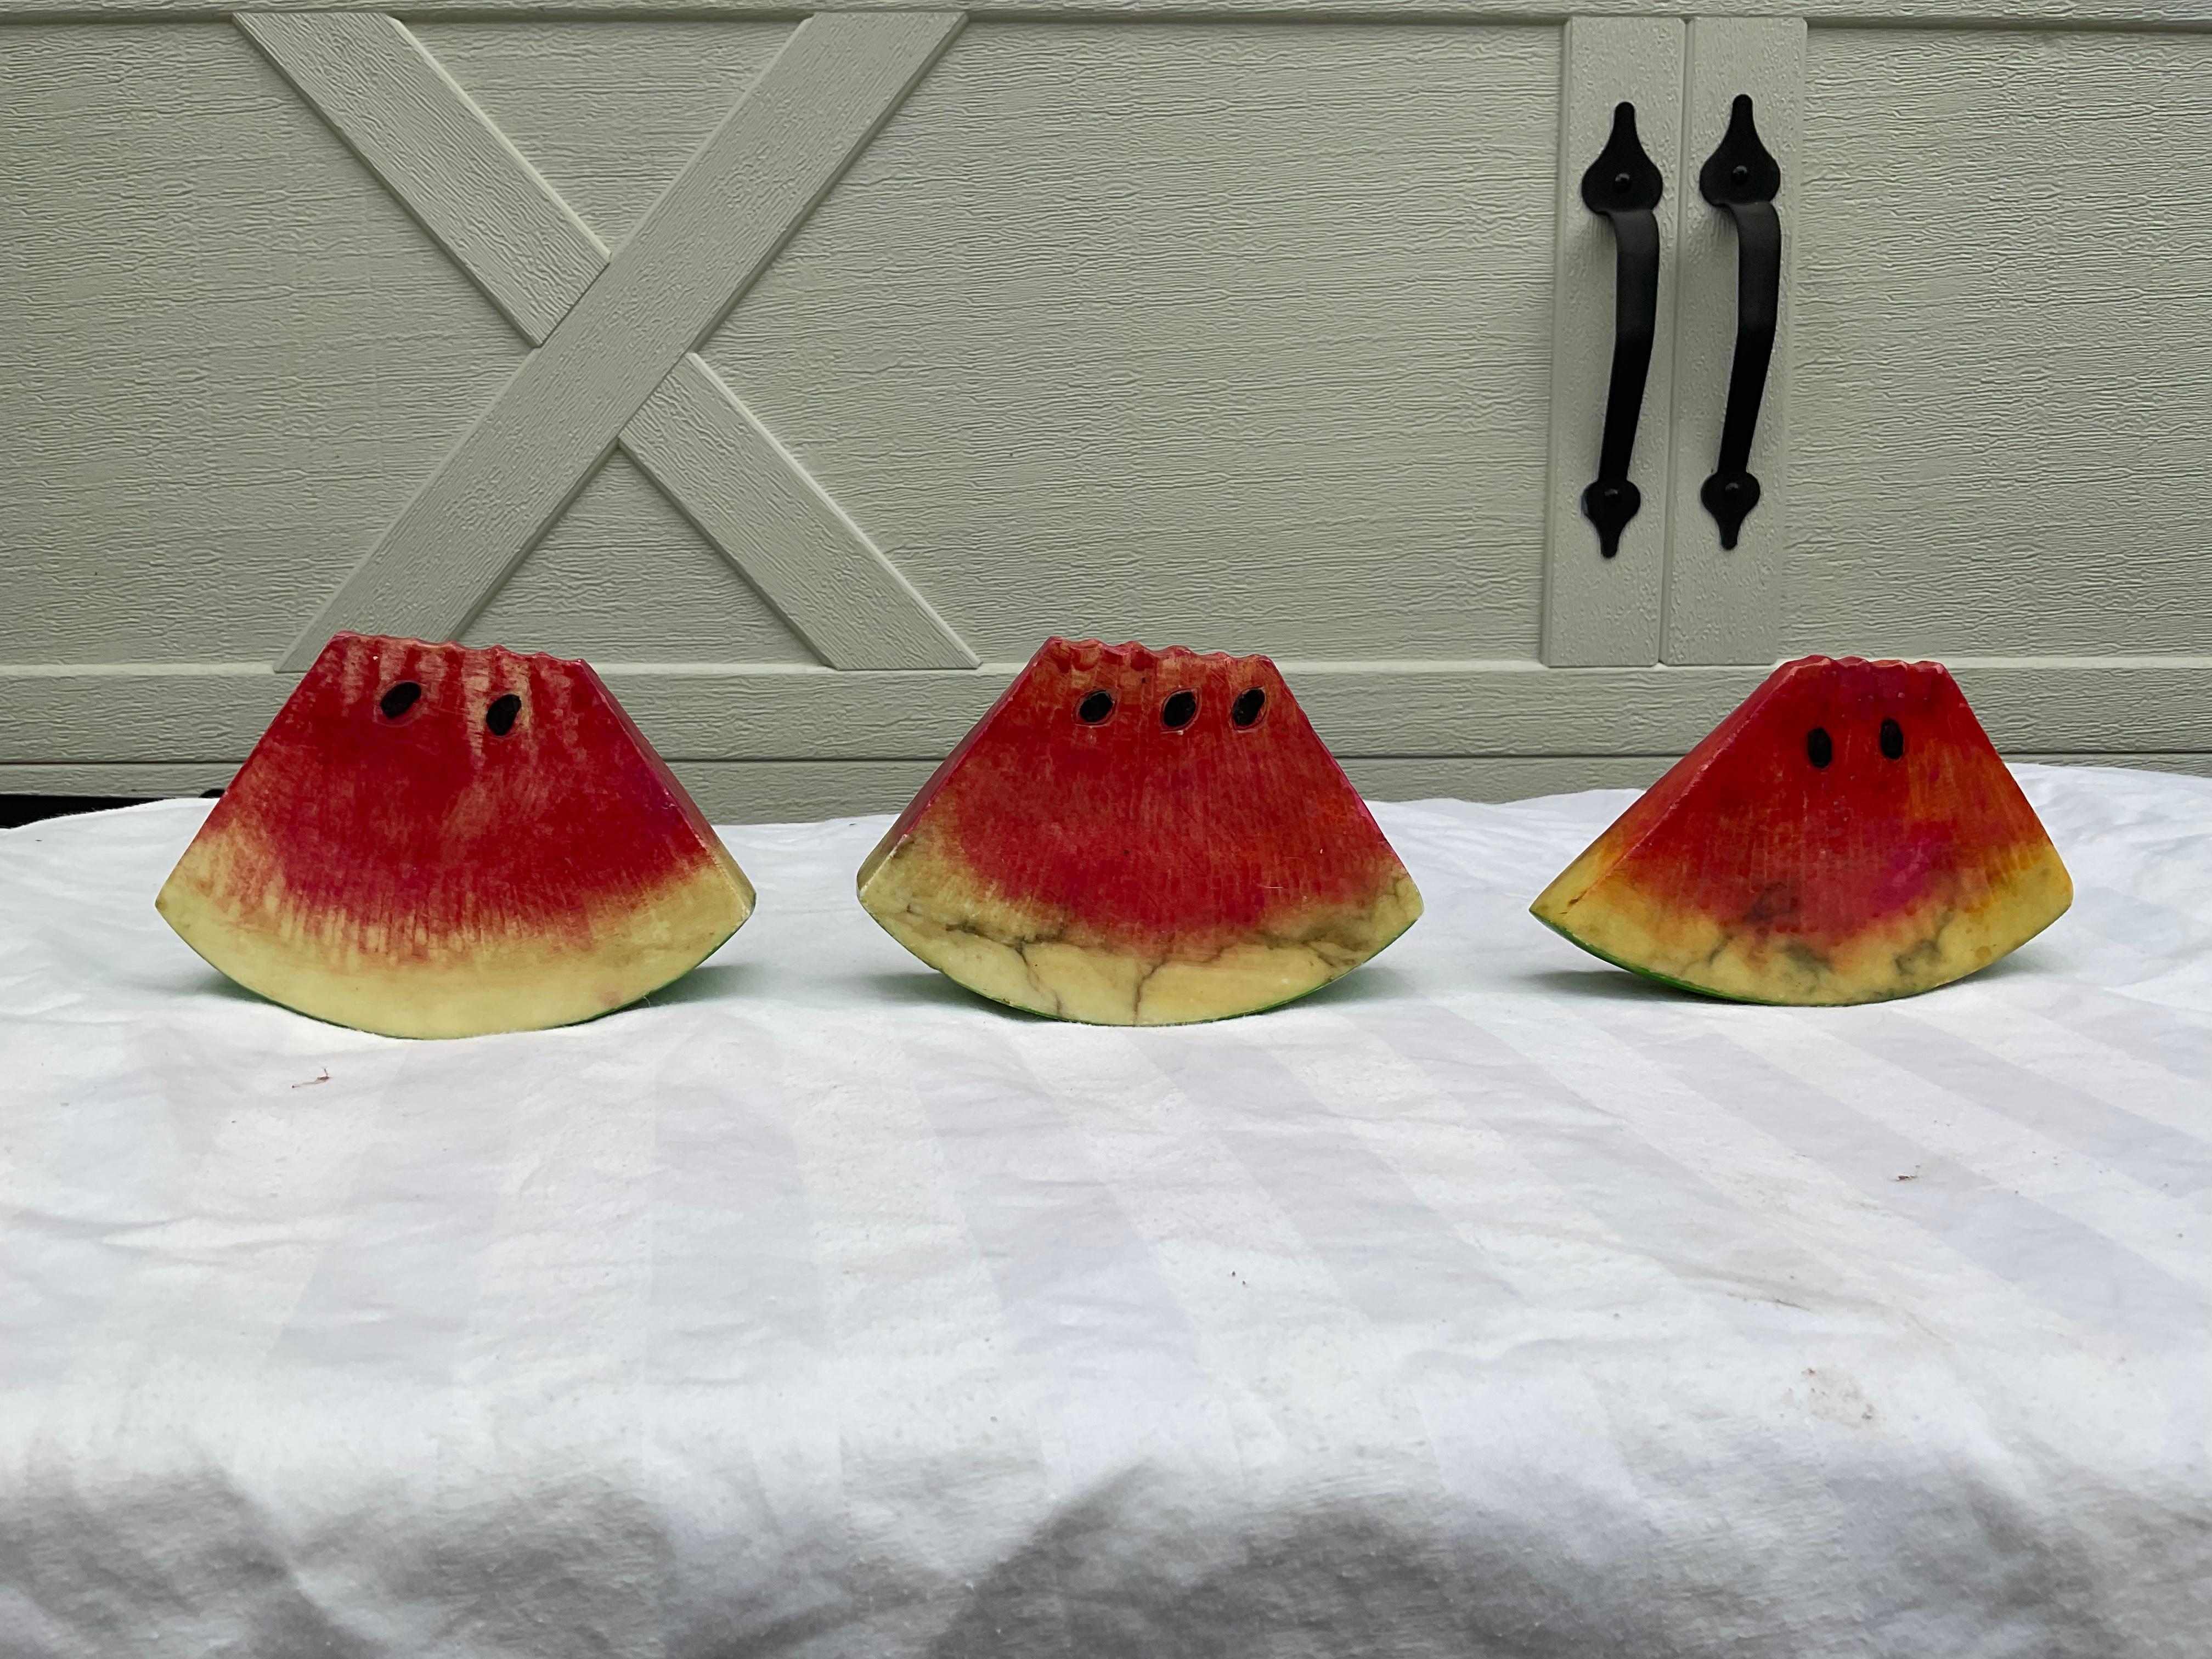 Hand-Painted 1960s Italian Stone Fruit, Watermelon Slices, 3